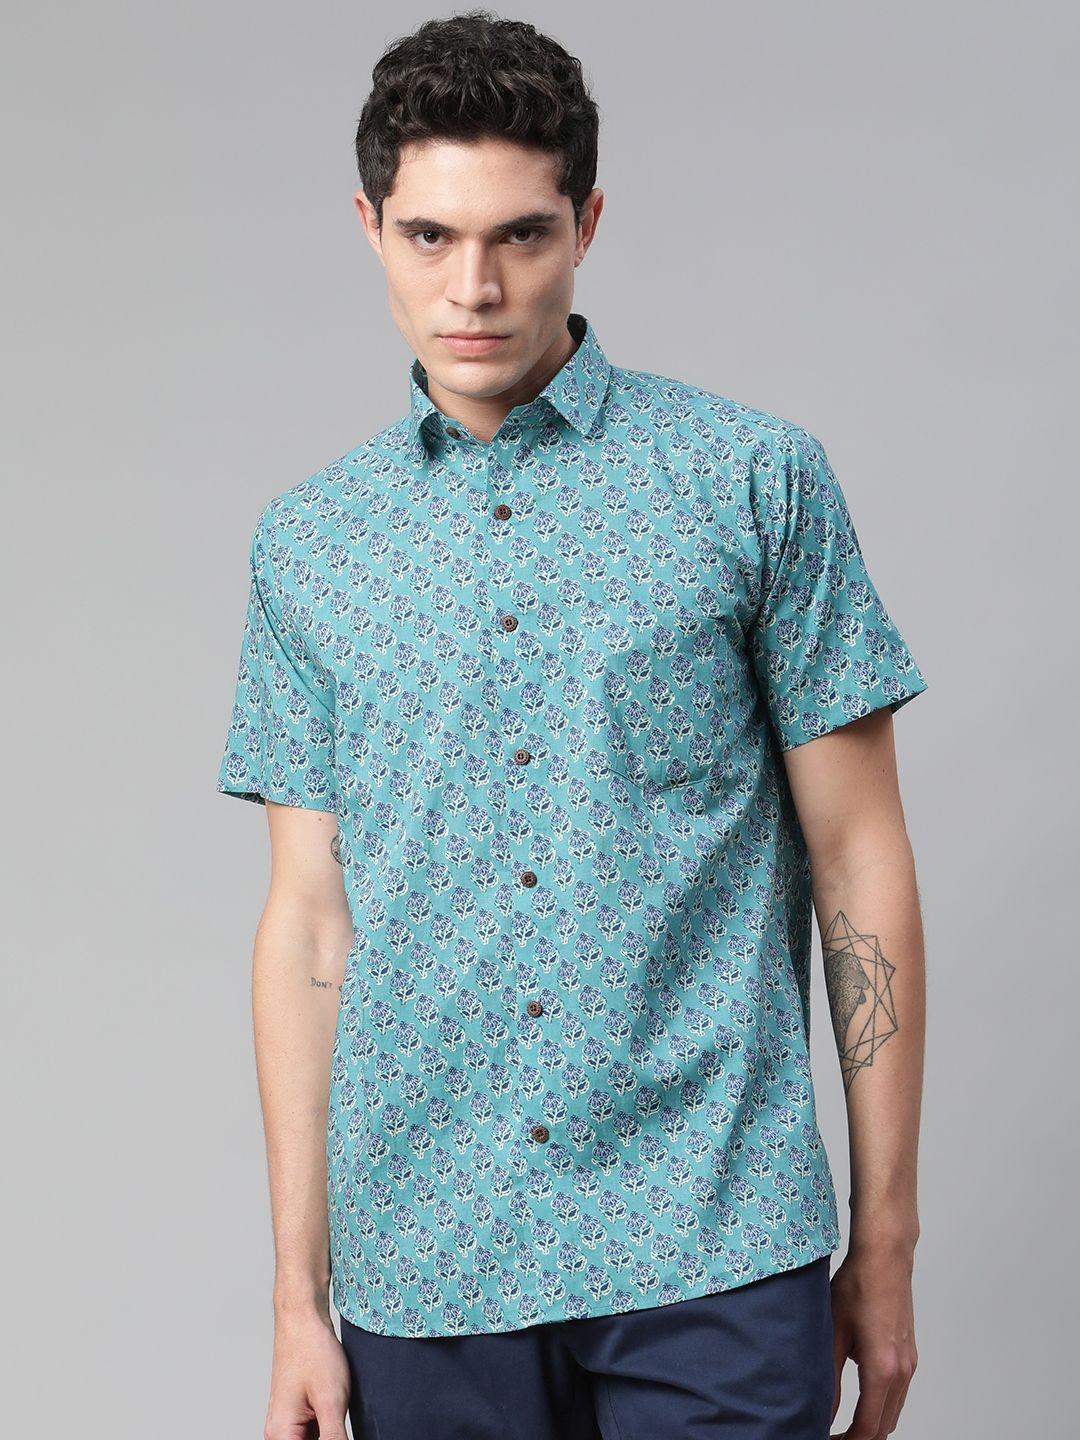 millennial men turquoise blue comfort printed casual shirt